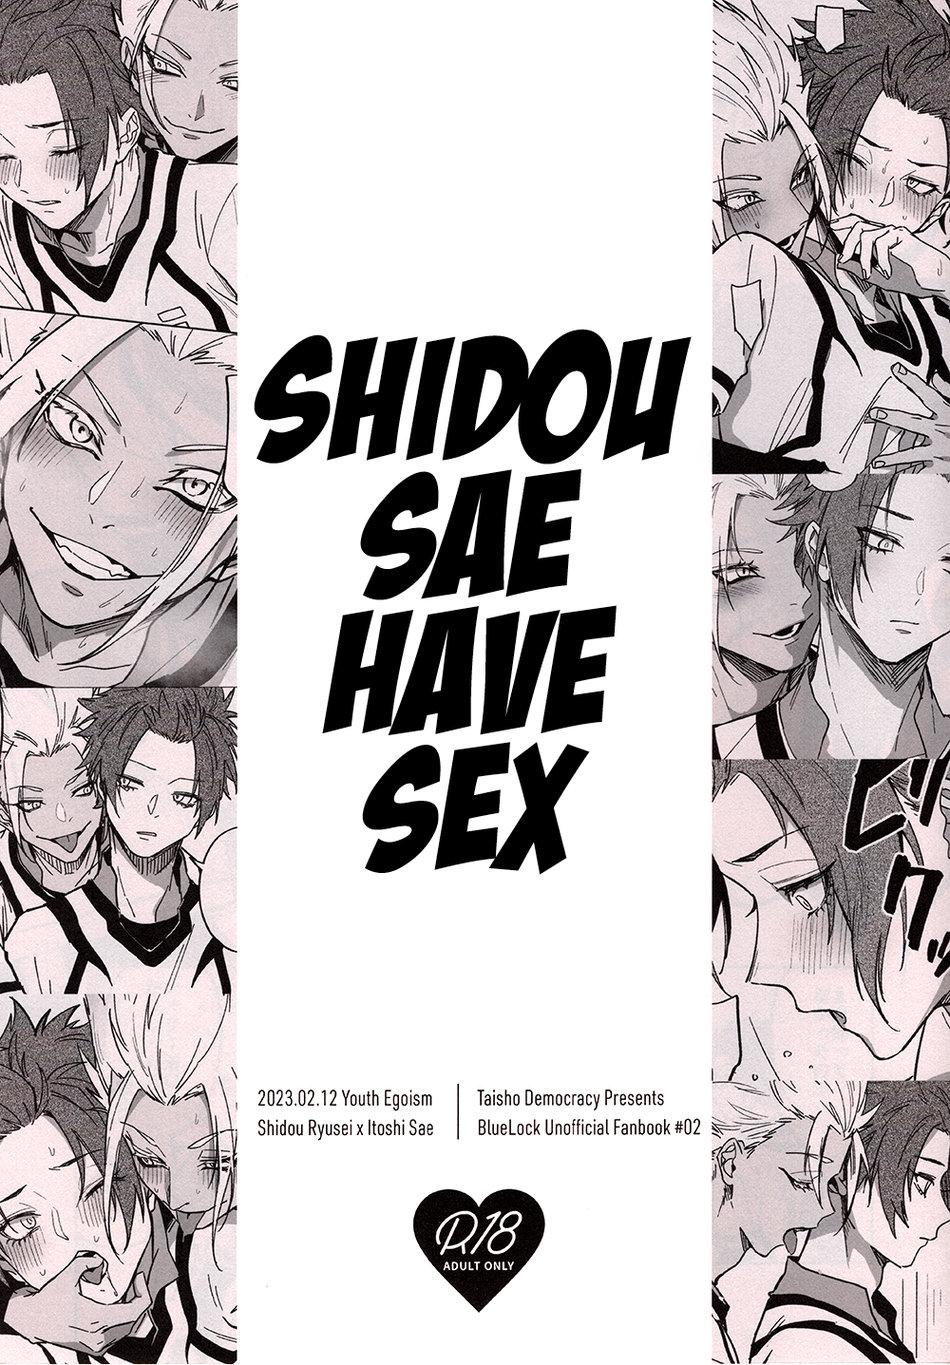 Usa Shido Sae Sex shiteru | ShidouSae have sex - Blue lock Satin - Picture 1